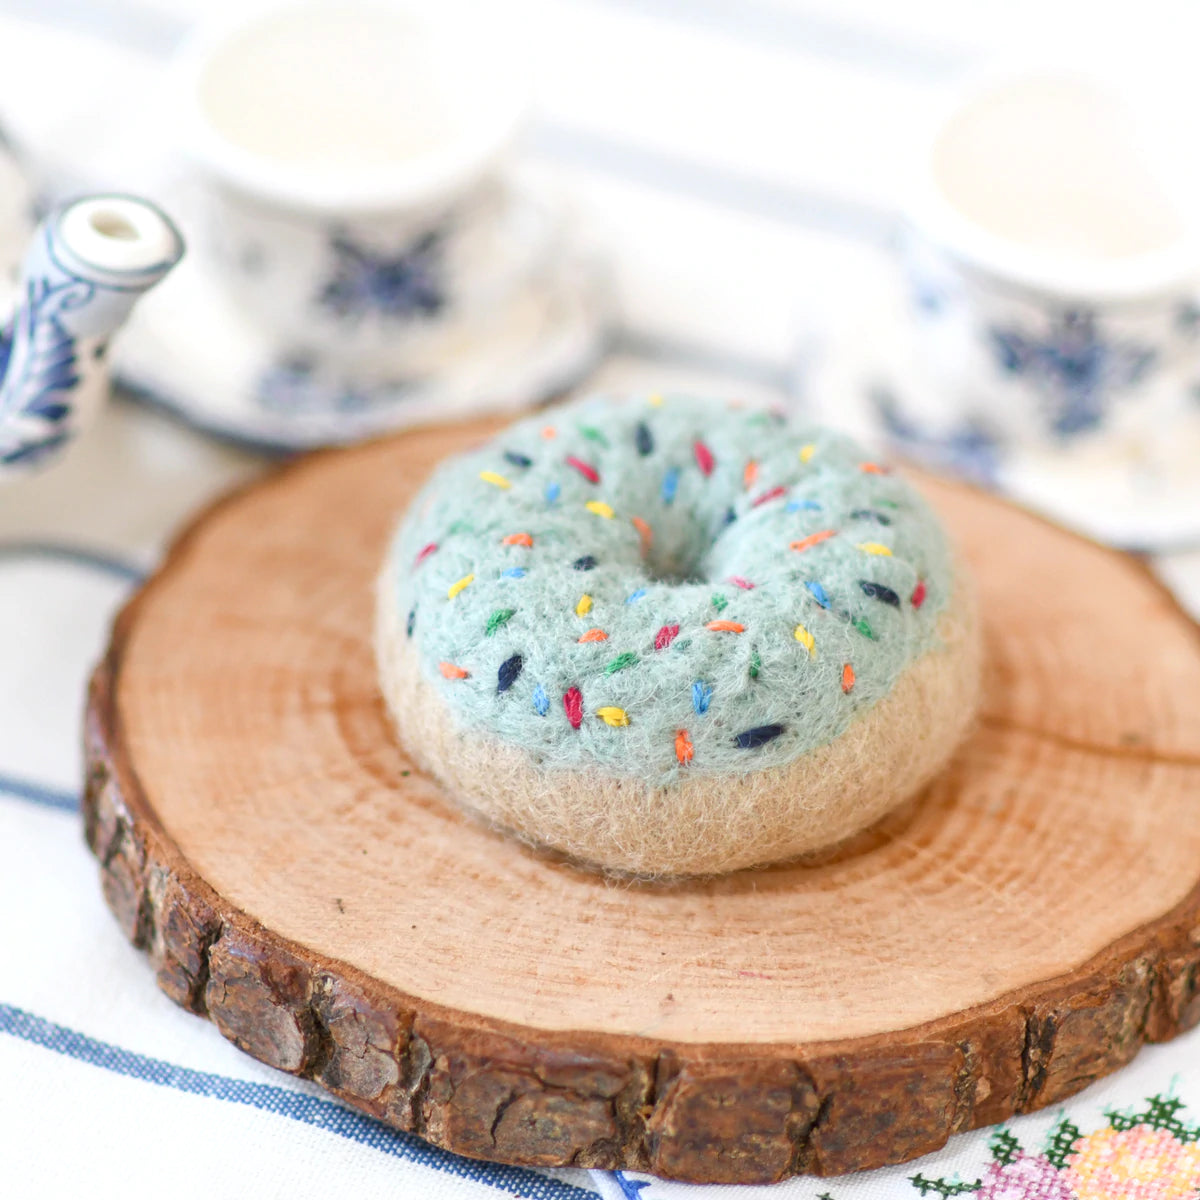 Felt Doughnut (Donut) with Blue Vanilla Frosting and Rainbow Sprinkles